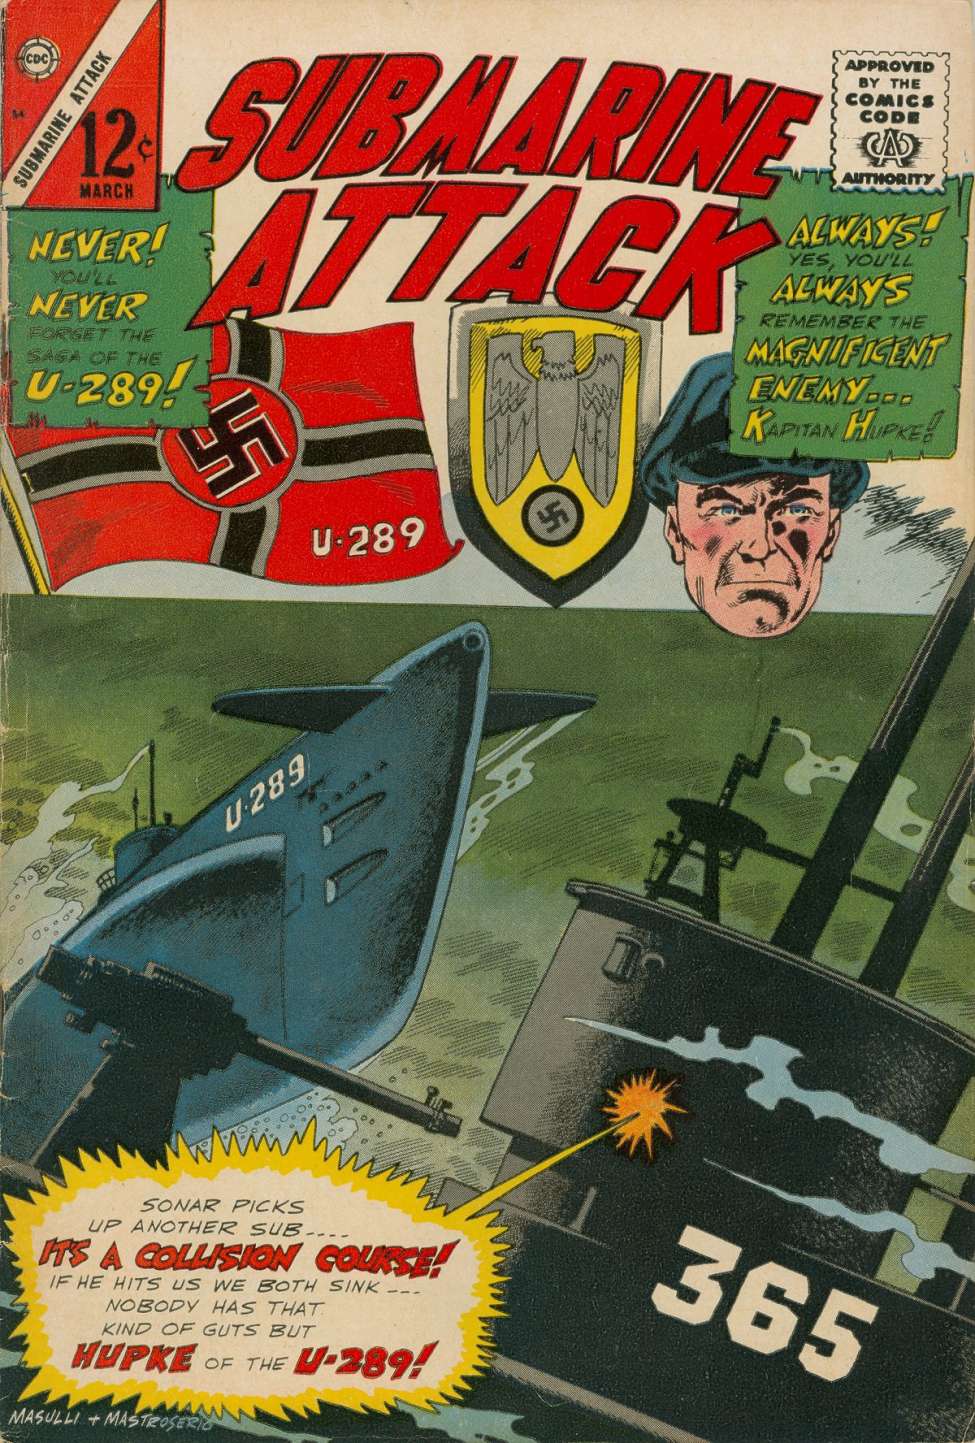 Book Cover For Submarine Attack 54